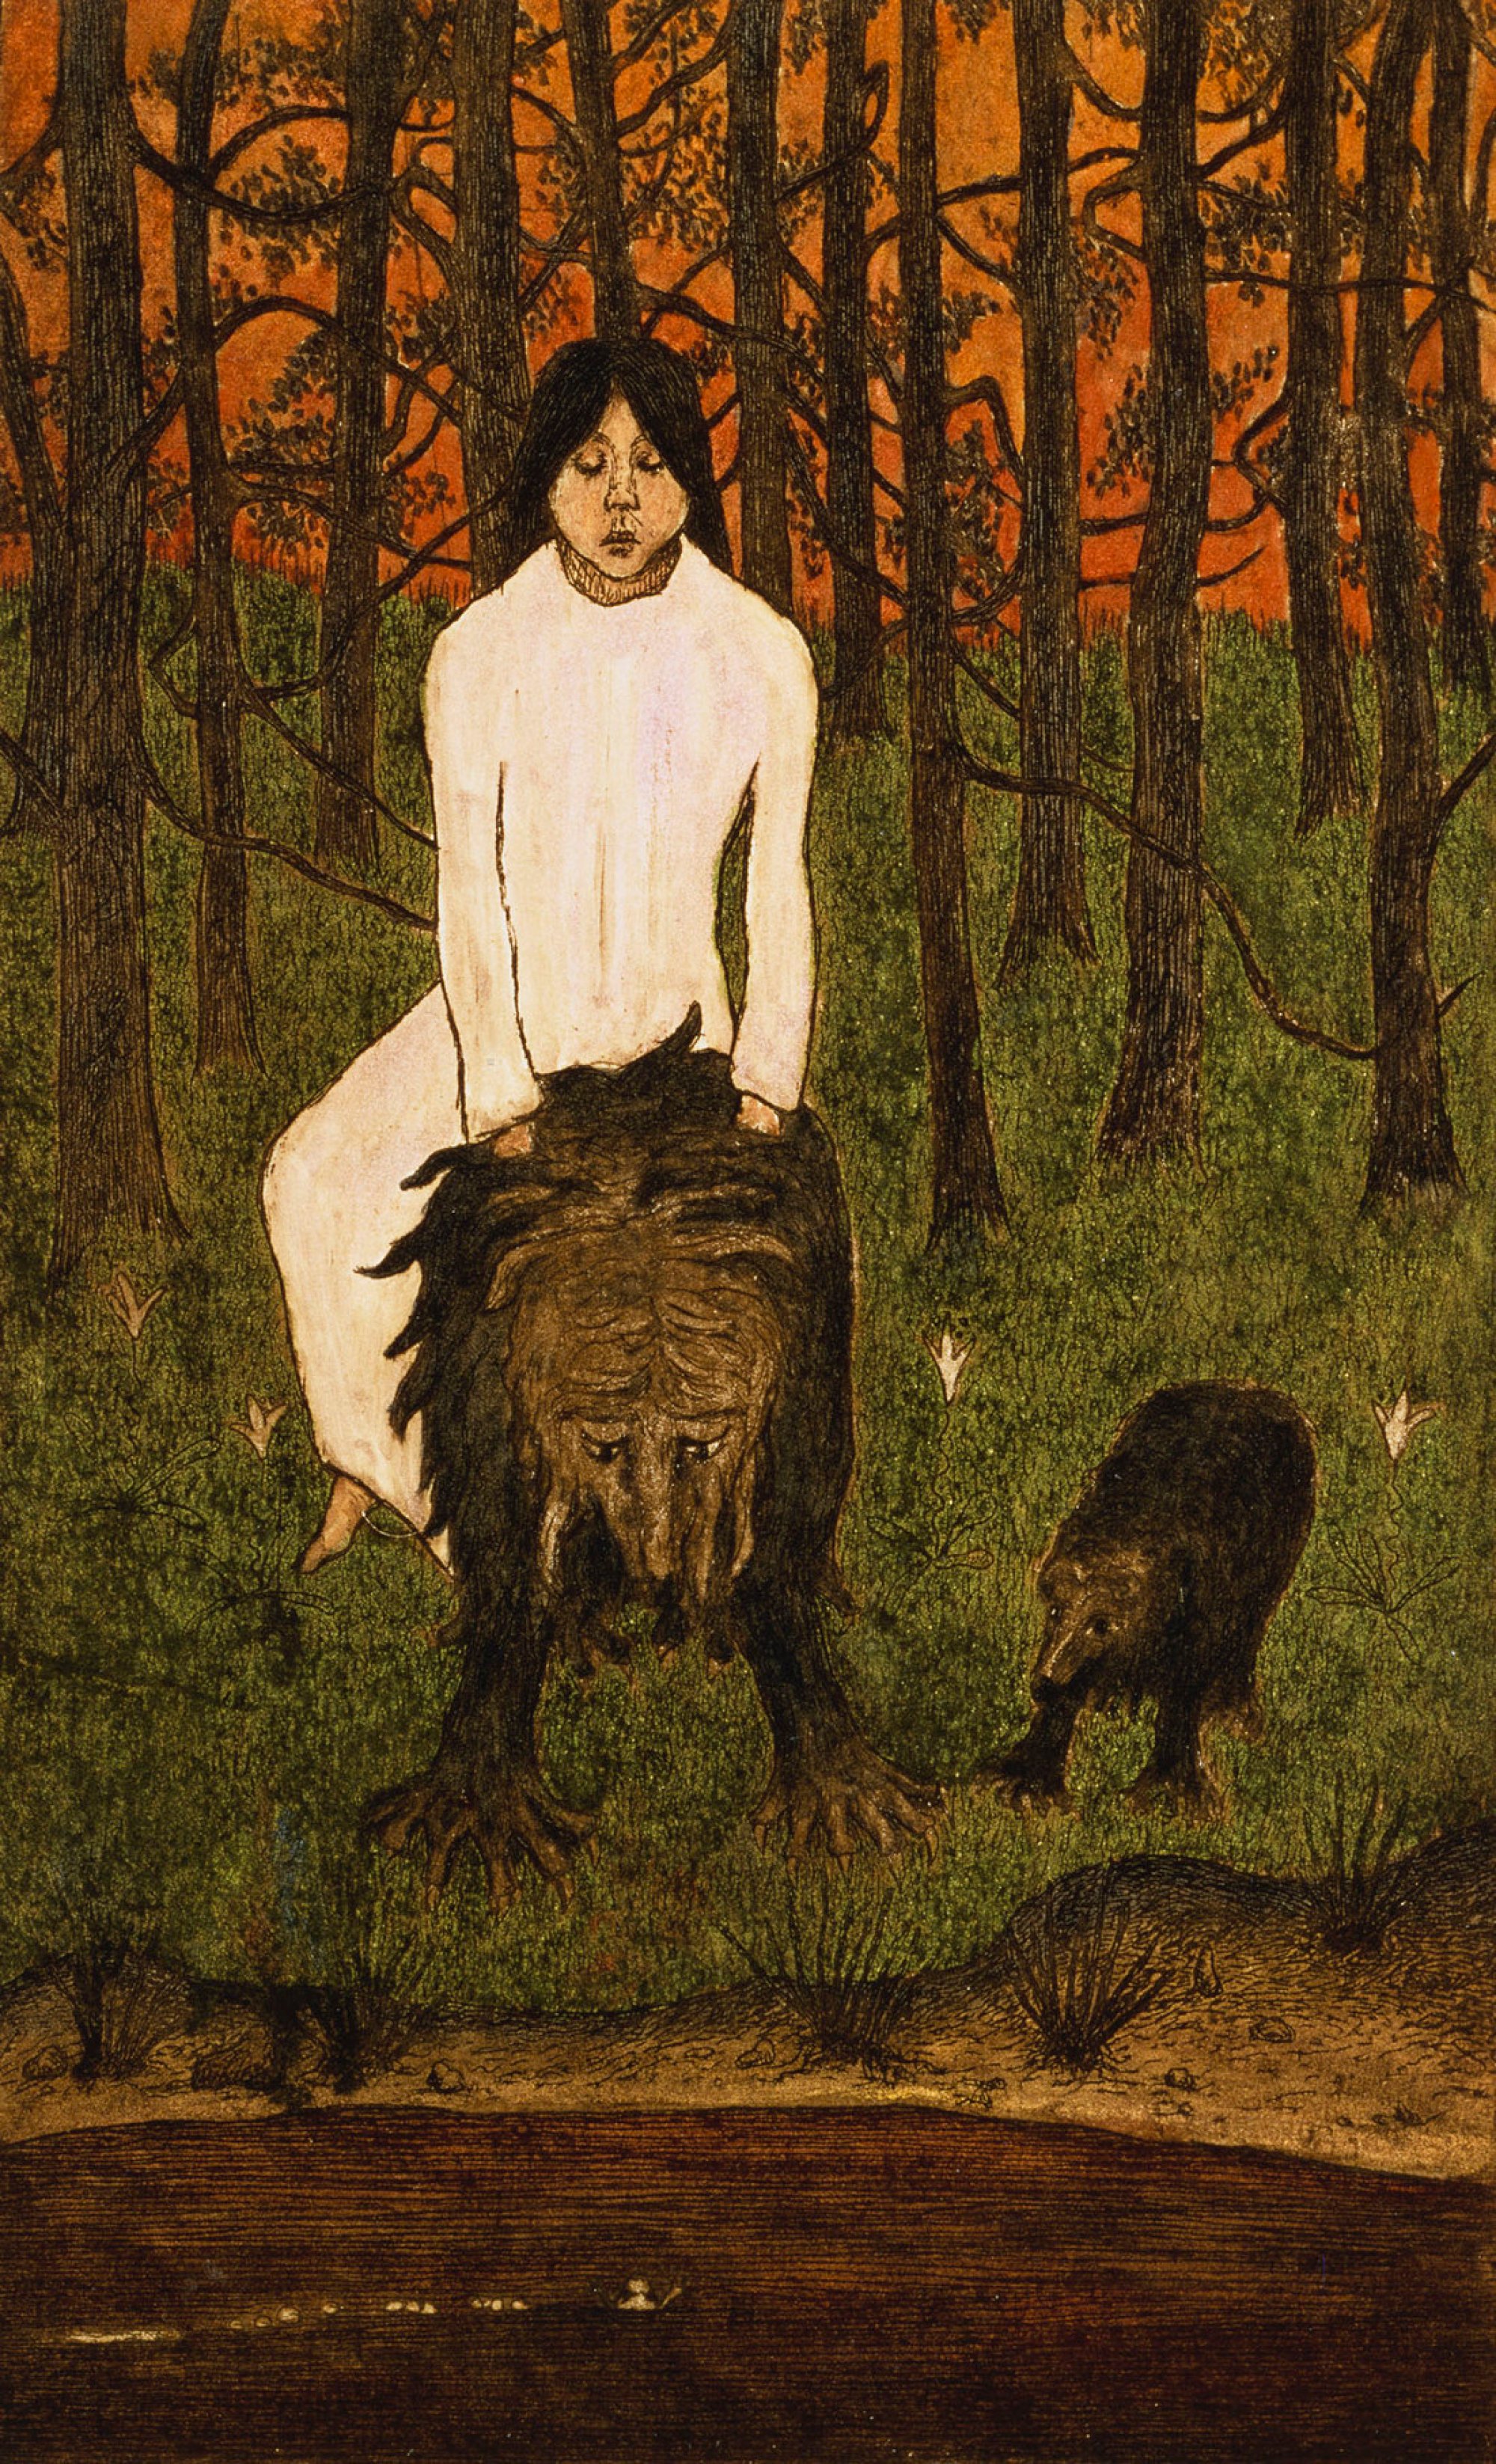 Conte de Fée by Hugo Simberg - 1898 Galerie Nationale Finlandaise